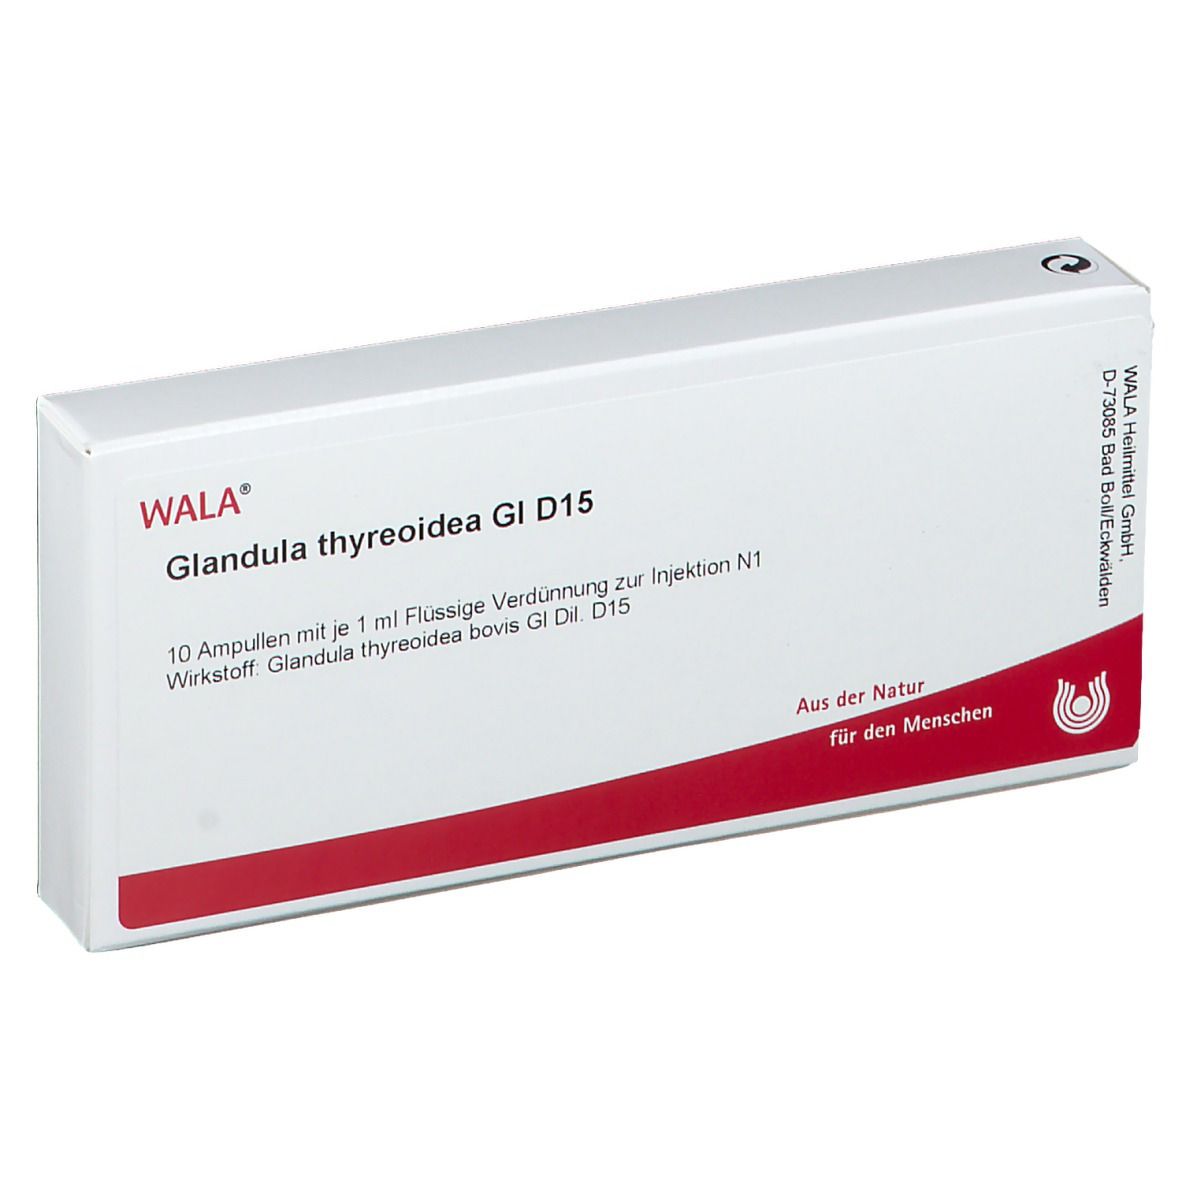 Wala® Glandula Thyreoidea Gl D 15 Ampullen